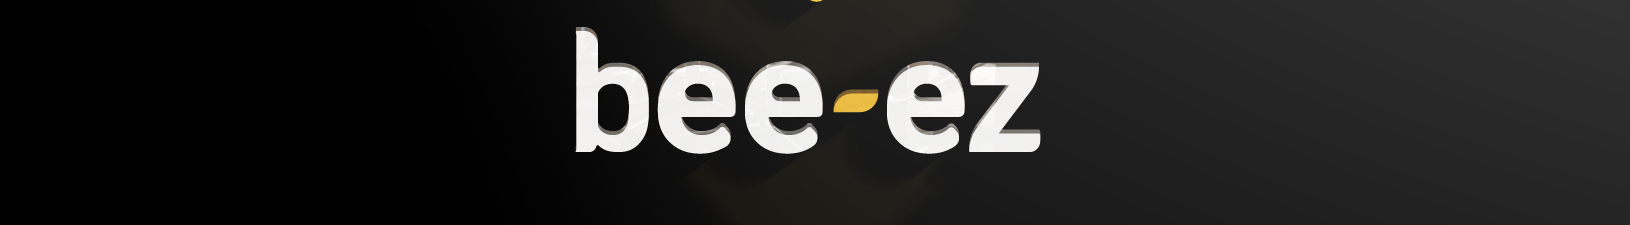 Bee-ez Studio's profile banner